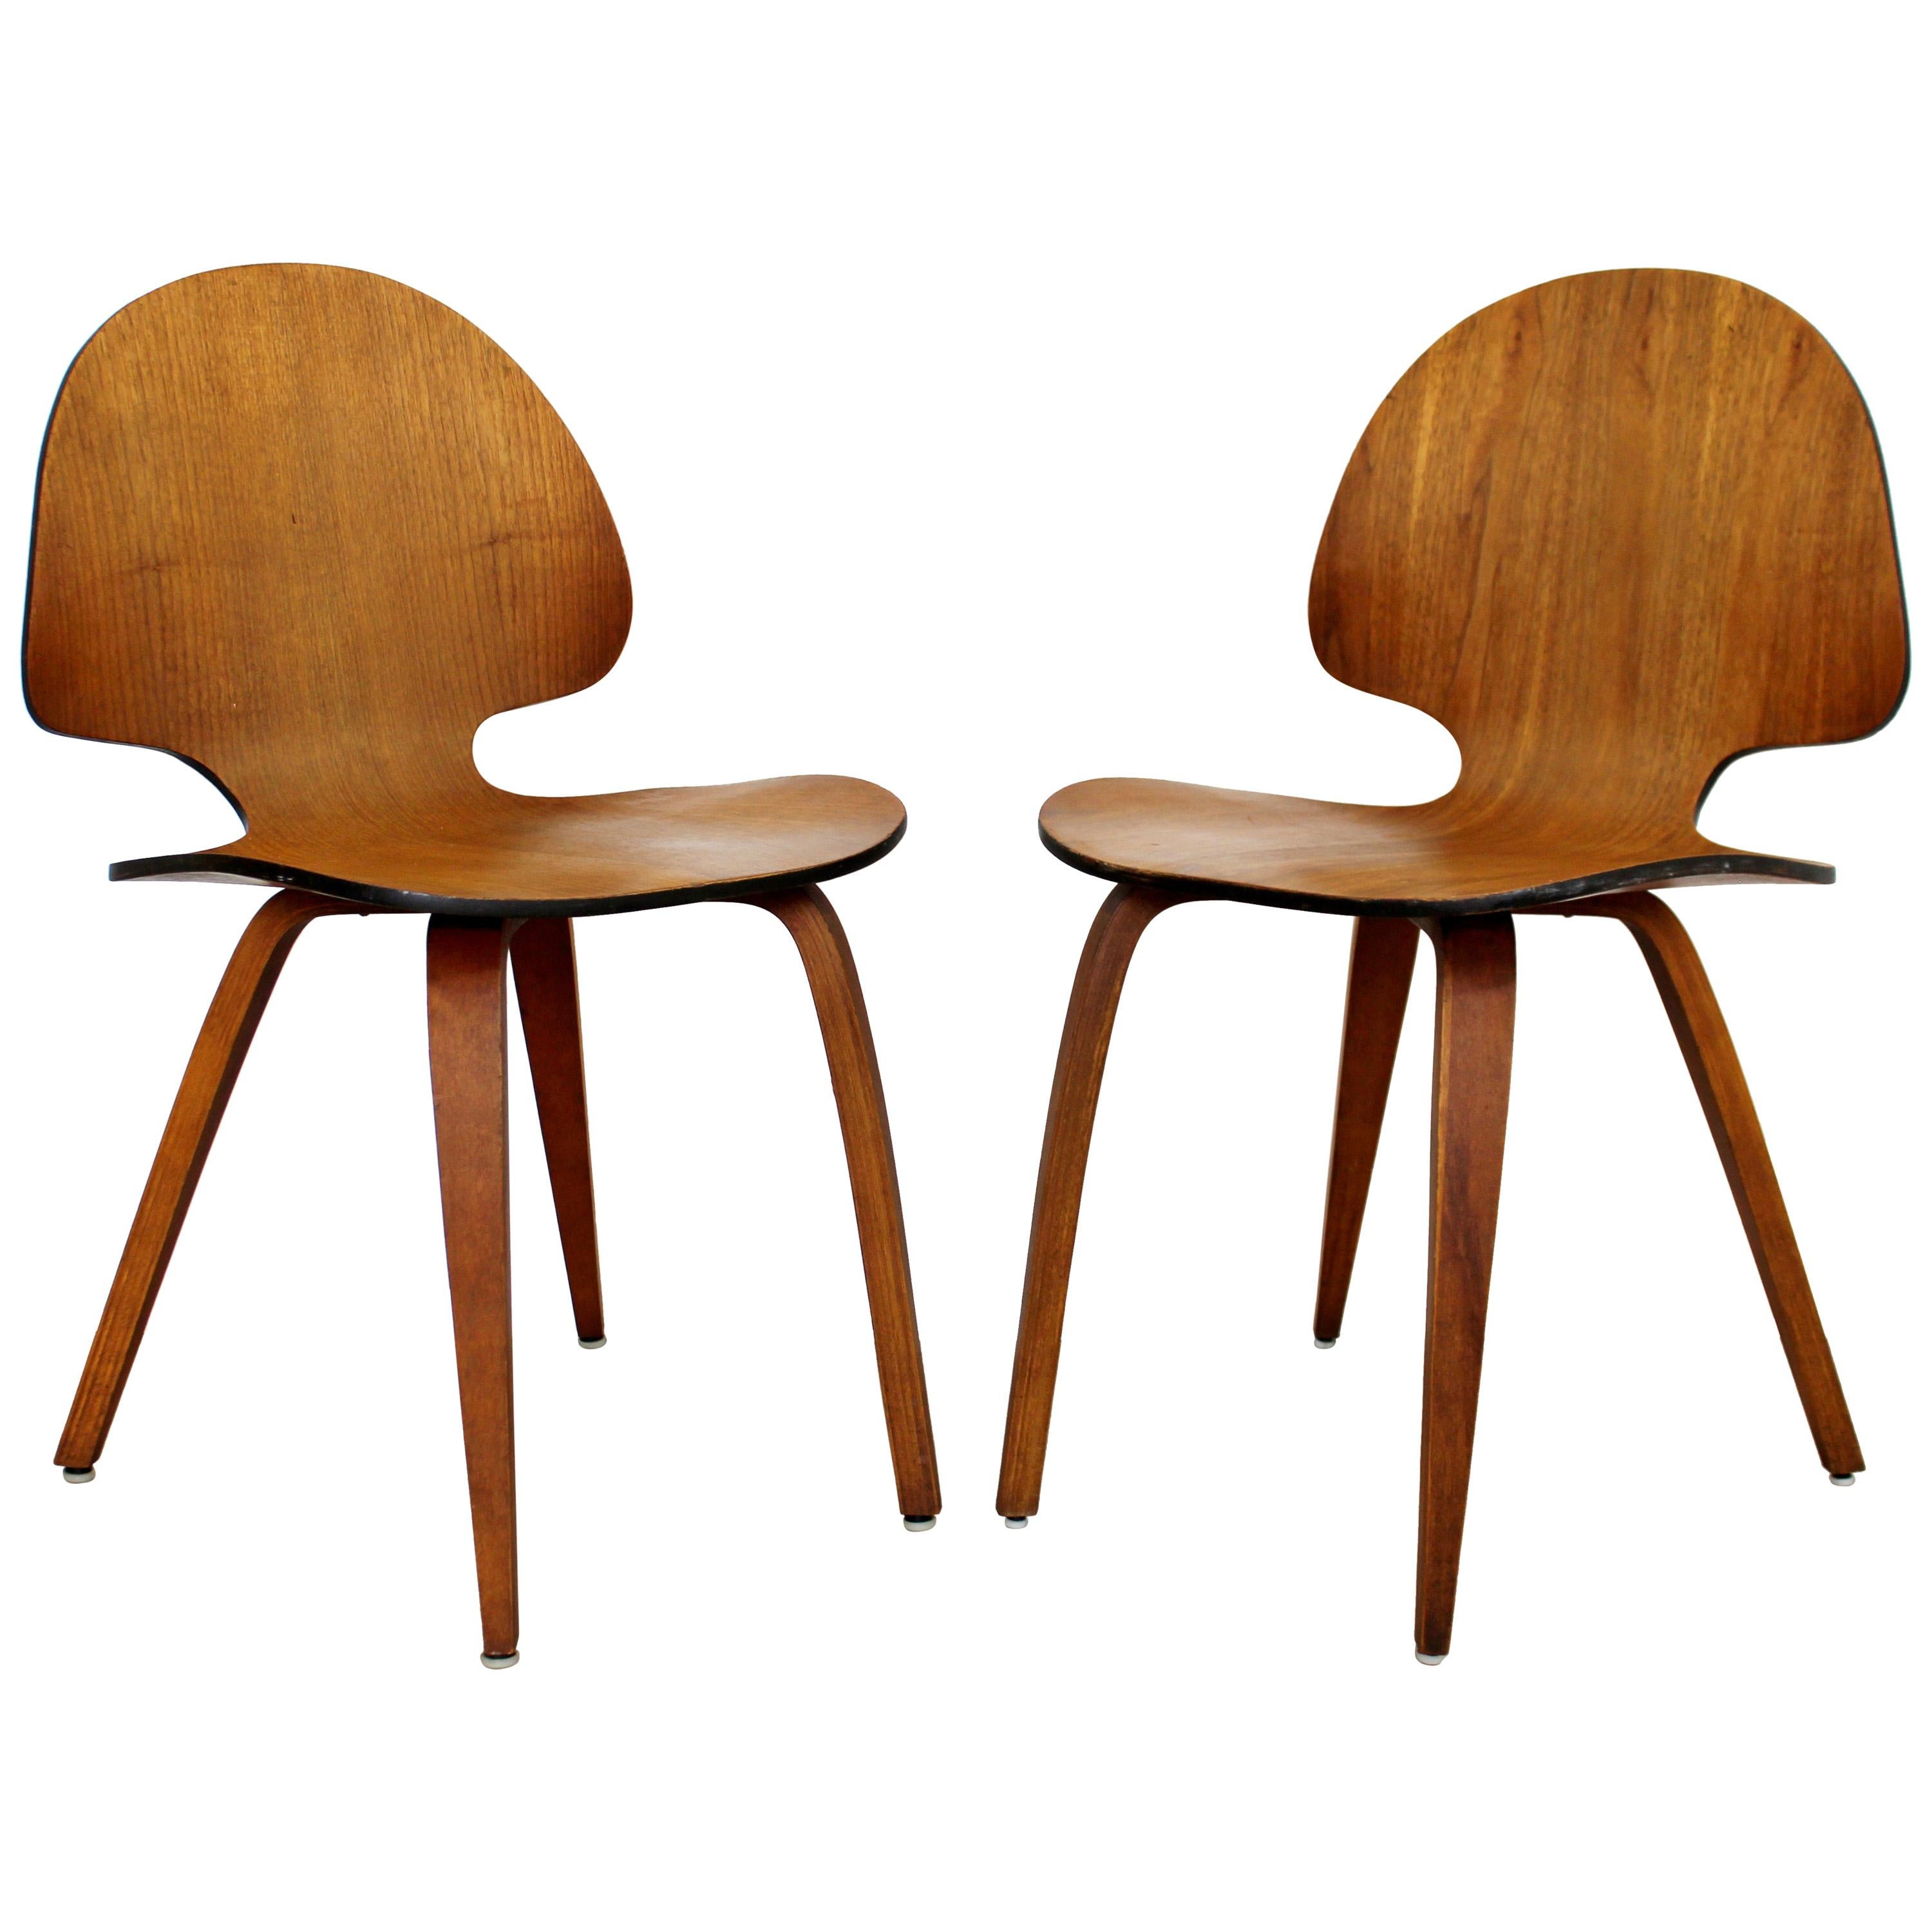 Mid-Century Modern Pair of Curved Bent Teak Wood Side Chairs Fritz Hansen Era